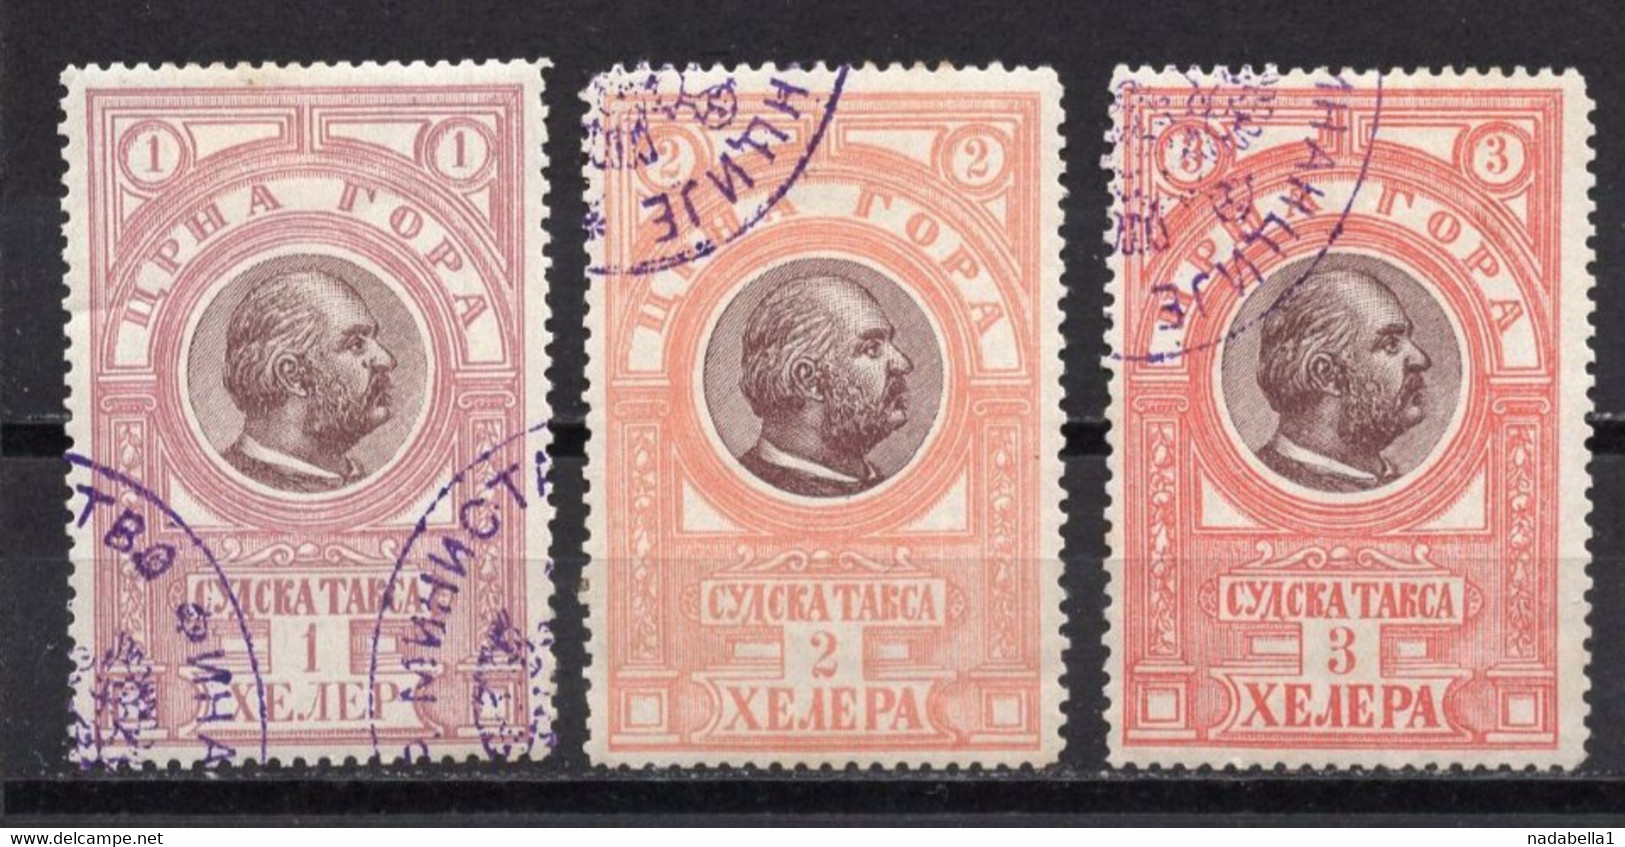 1910s MONTENEGRO,KING NIKOLA,3 COURT TAX,REVENUE STAMPS,1,2,3,HELLER,USED - Montenegro